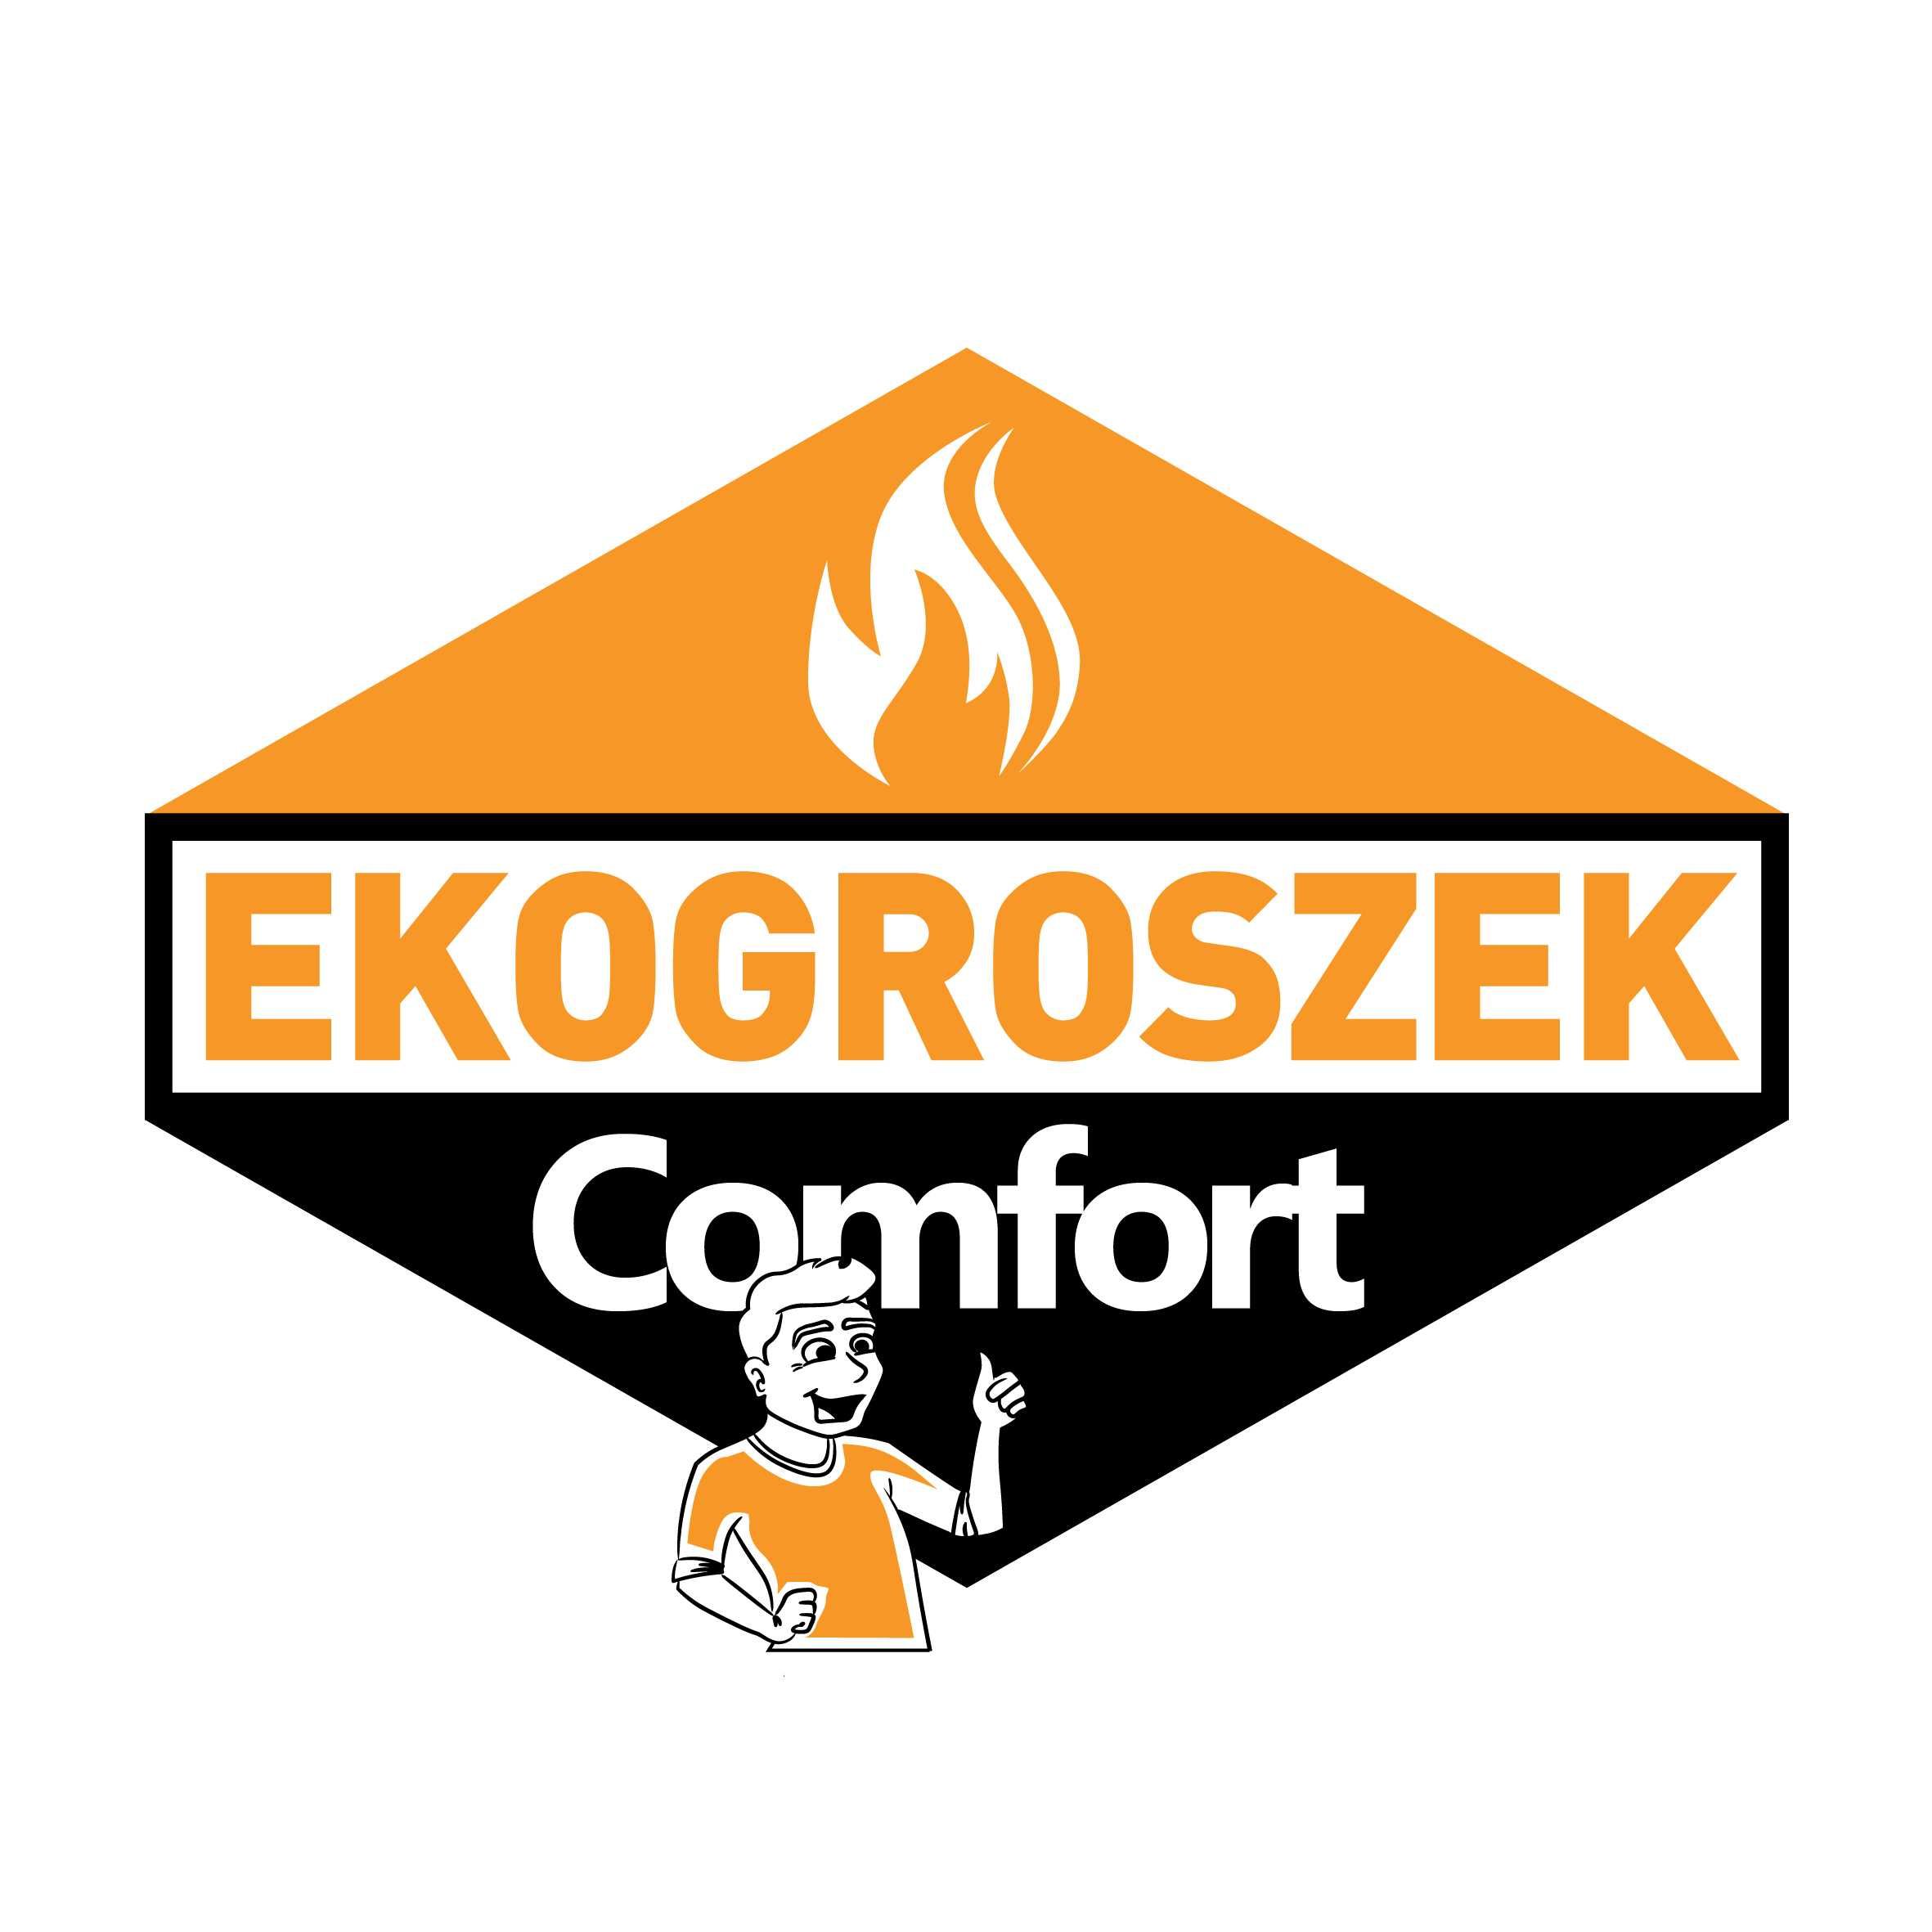 Ekogroszek COMFORT 40 x 25 kg (RAD)